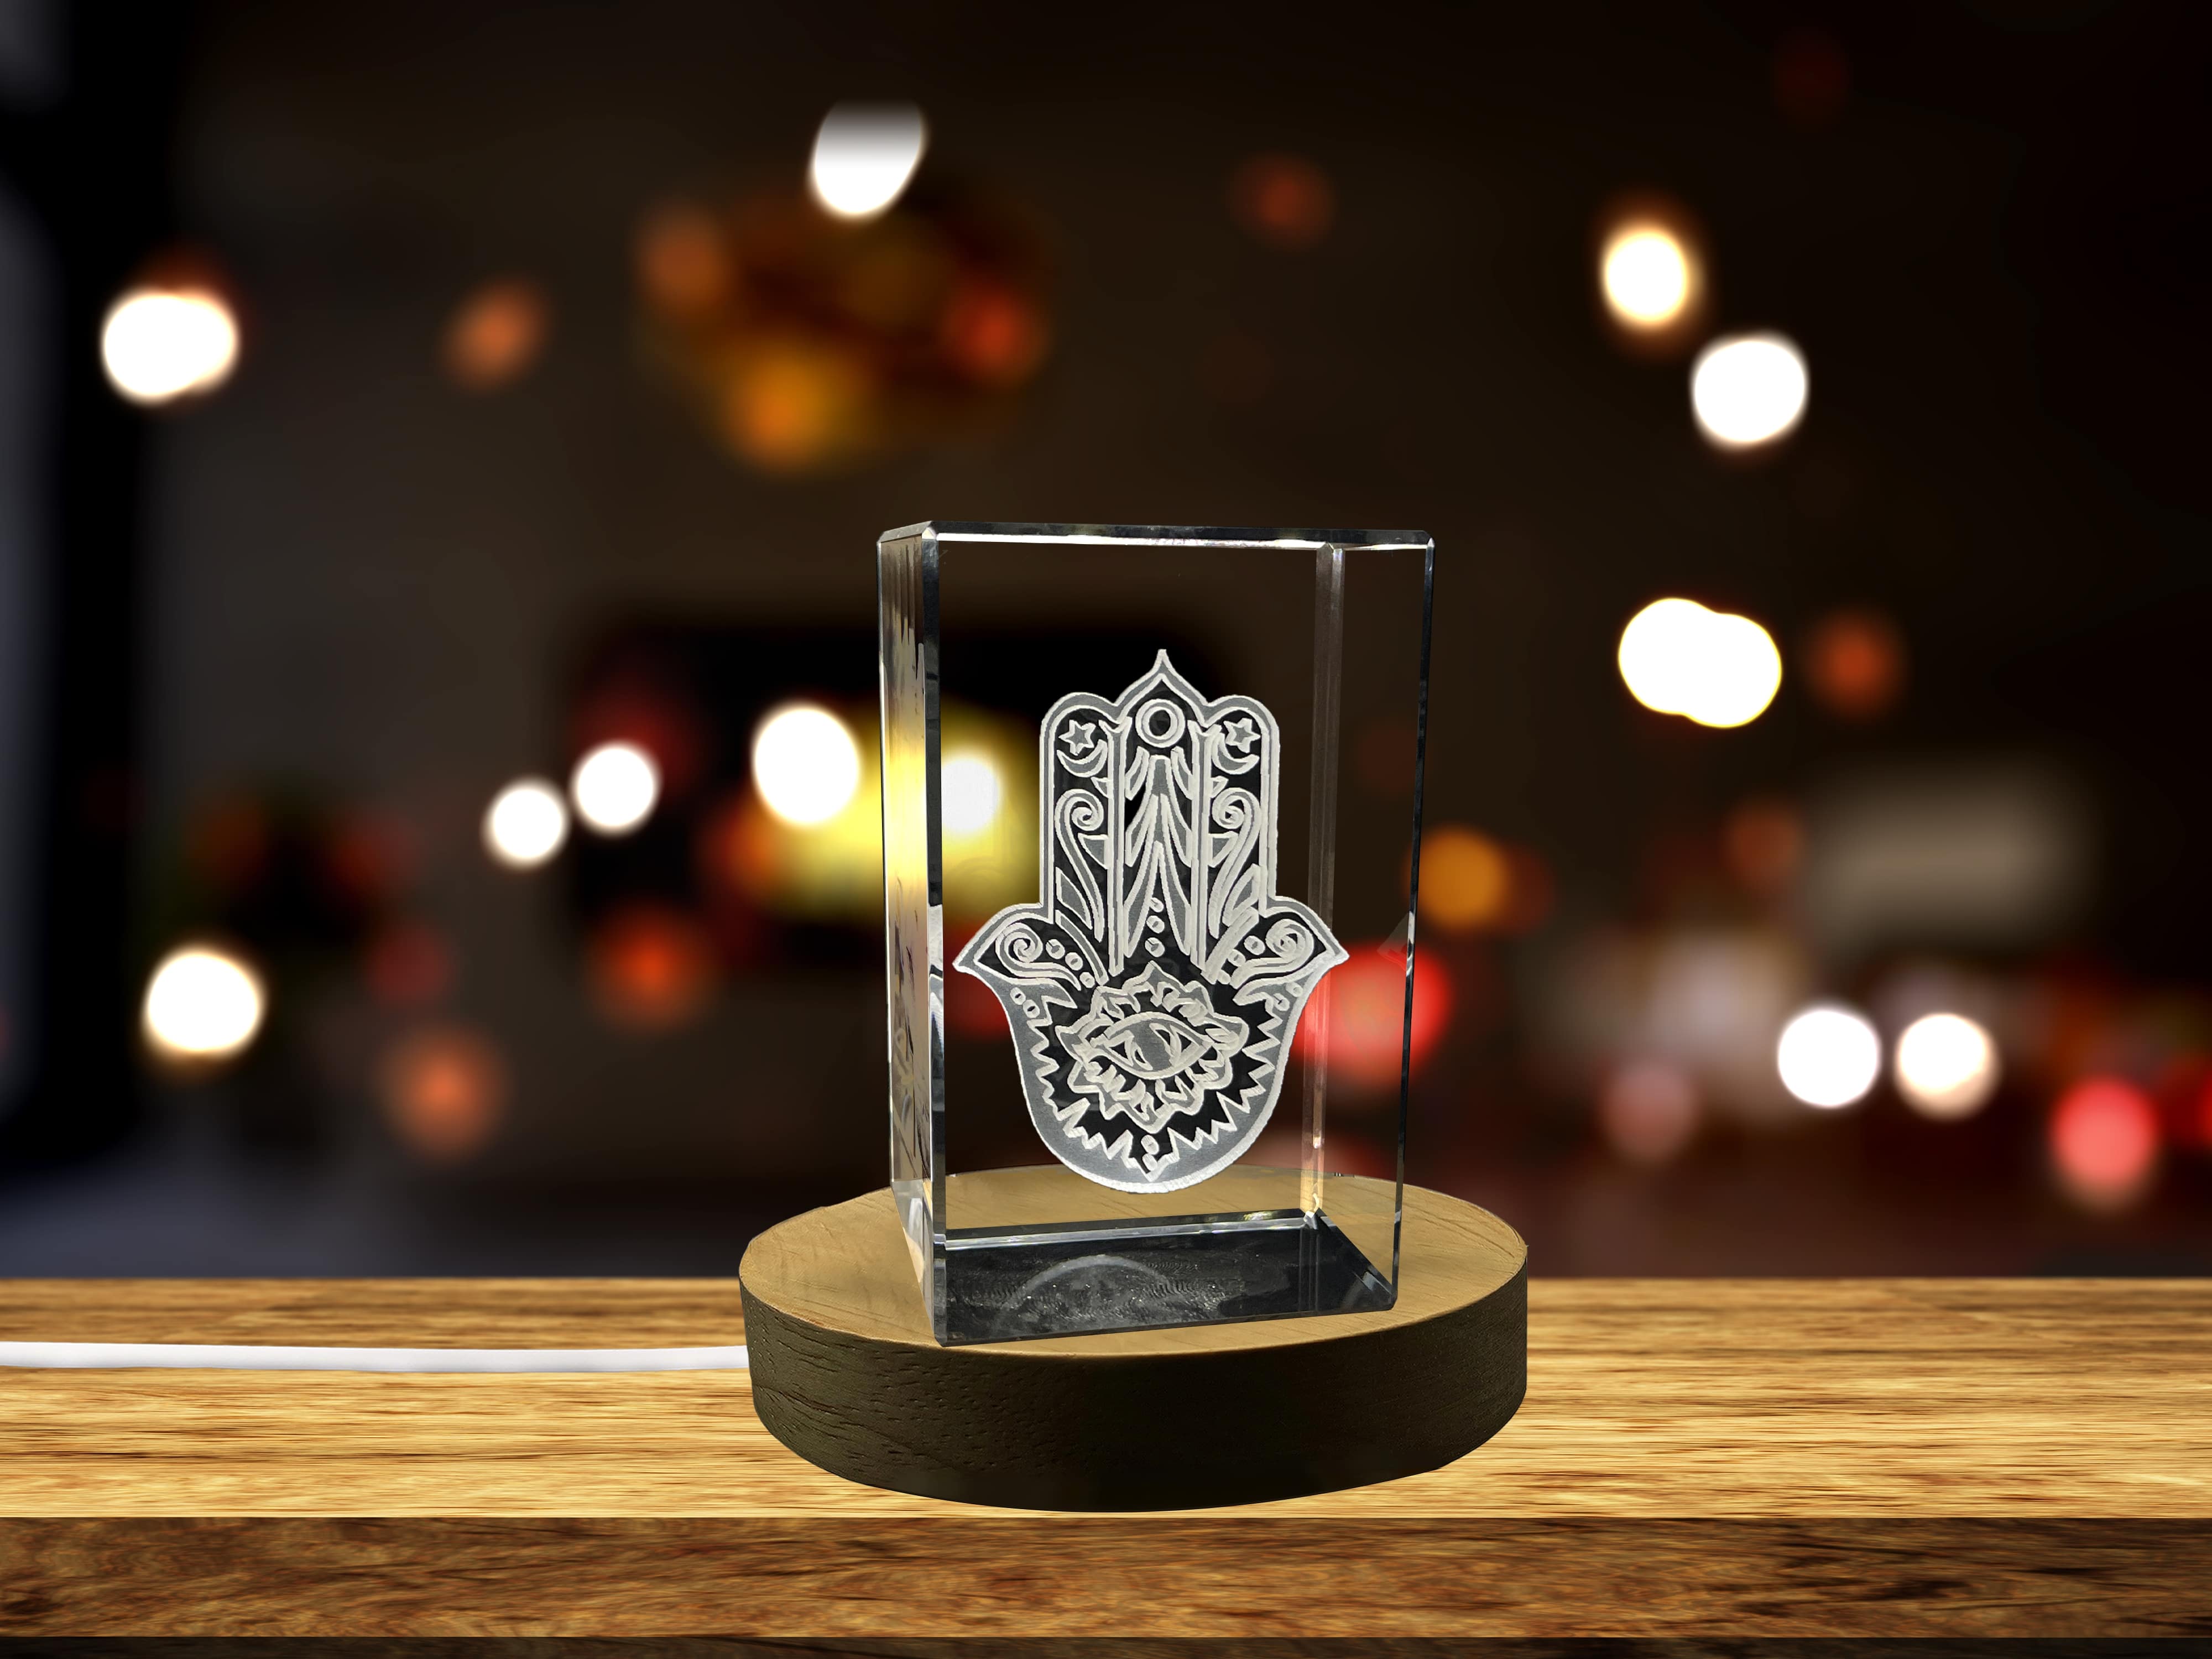 3D Engraved Crystal Keepsake | Hamsa Hand Design | LED Base Light Included A&B Crystal Collection